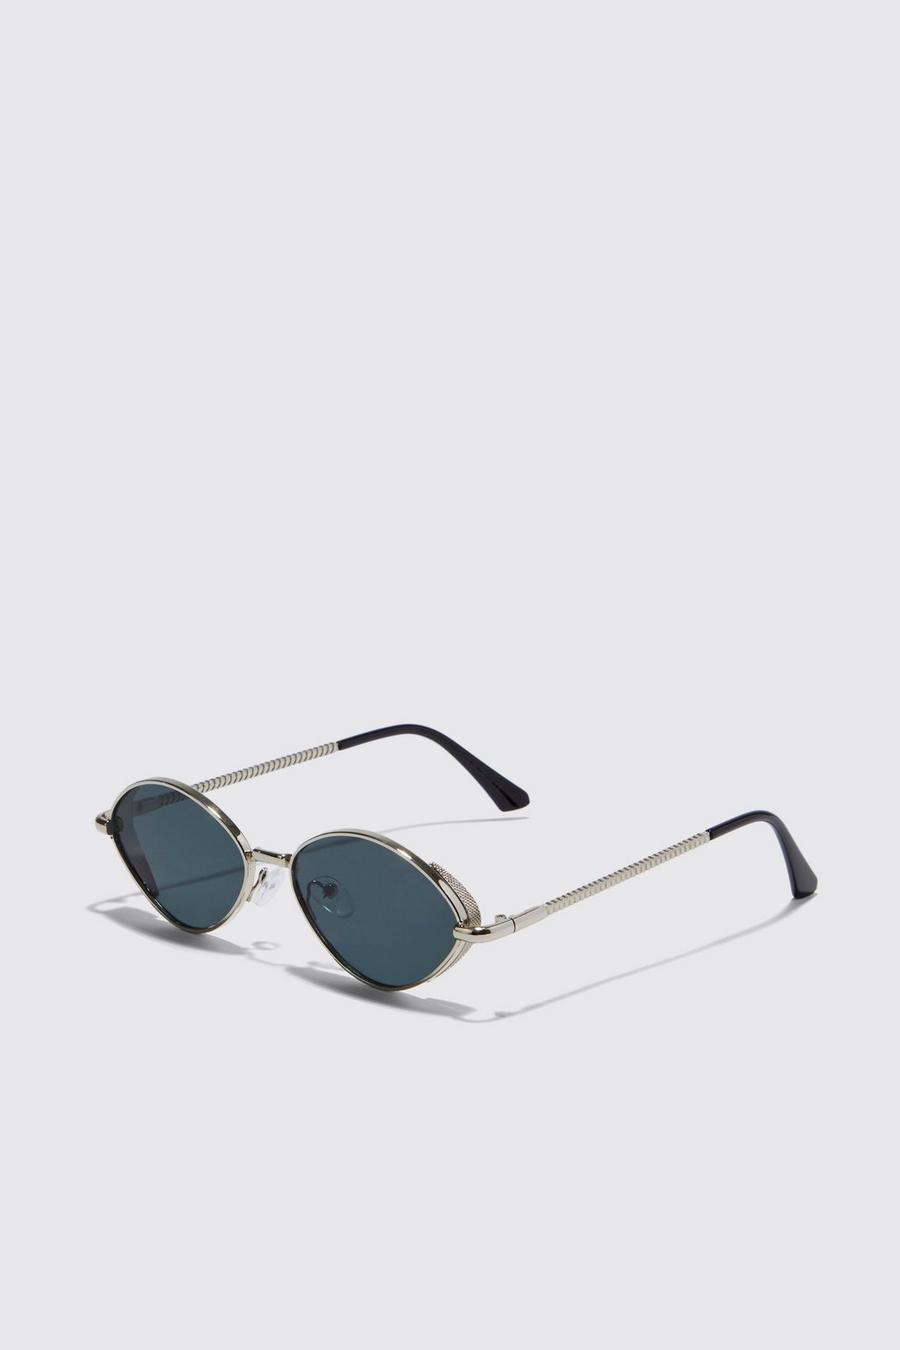 Silver Oval Lens Retro Sunglasses